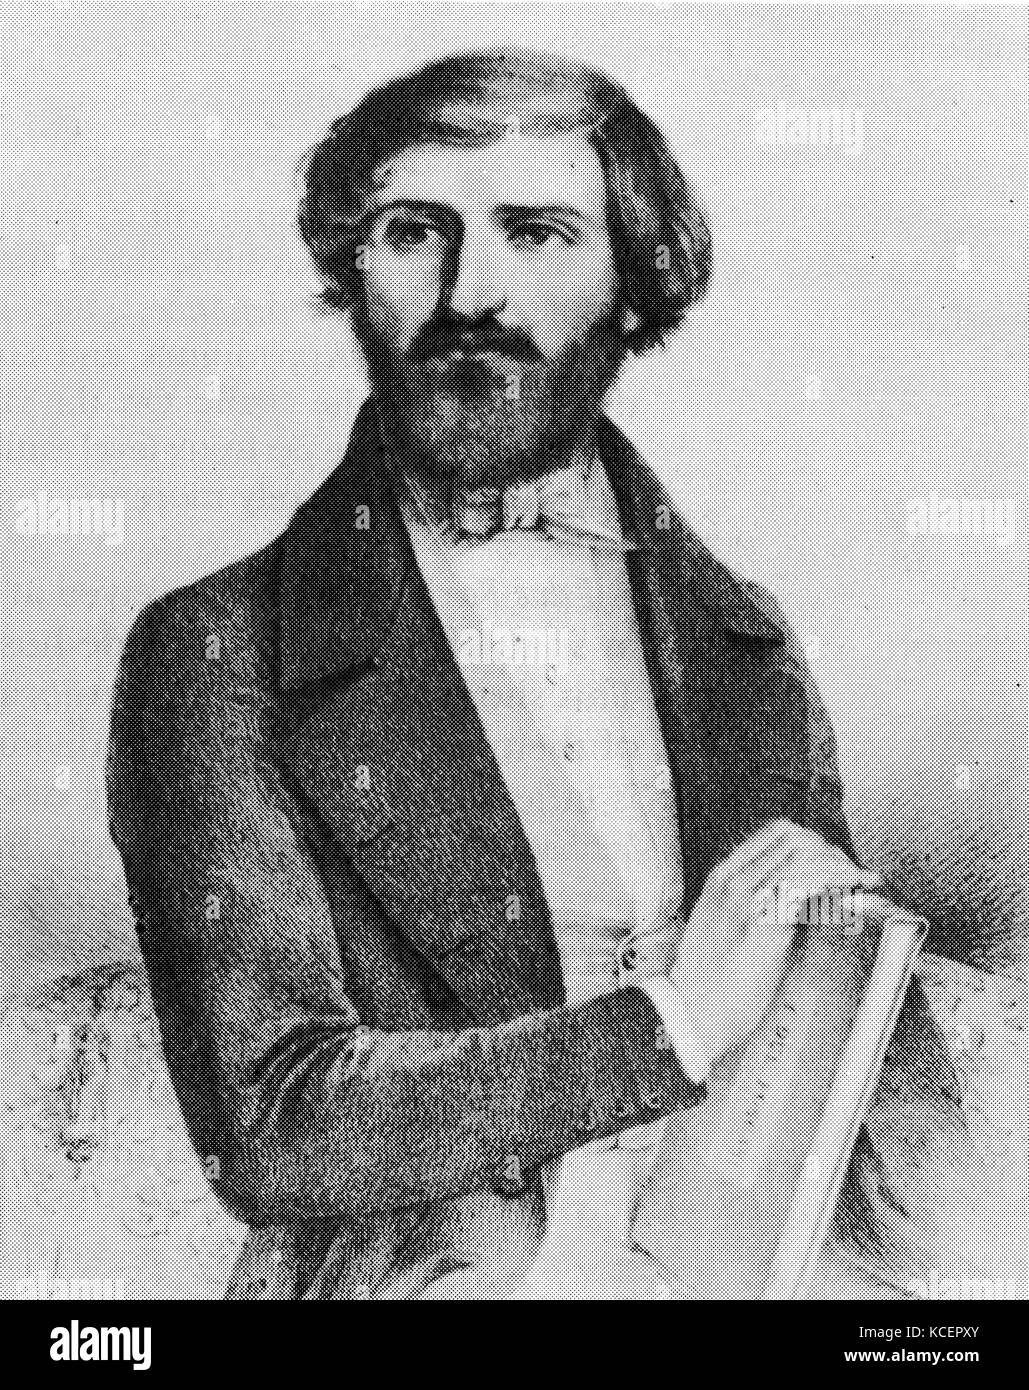 Retrato de Giuseppe Verdi (1813-1901), un compositor de ópera italiana. Fecha del siglo XIX Foto de stock